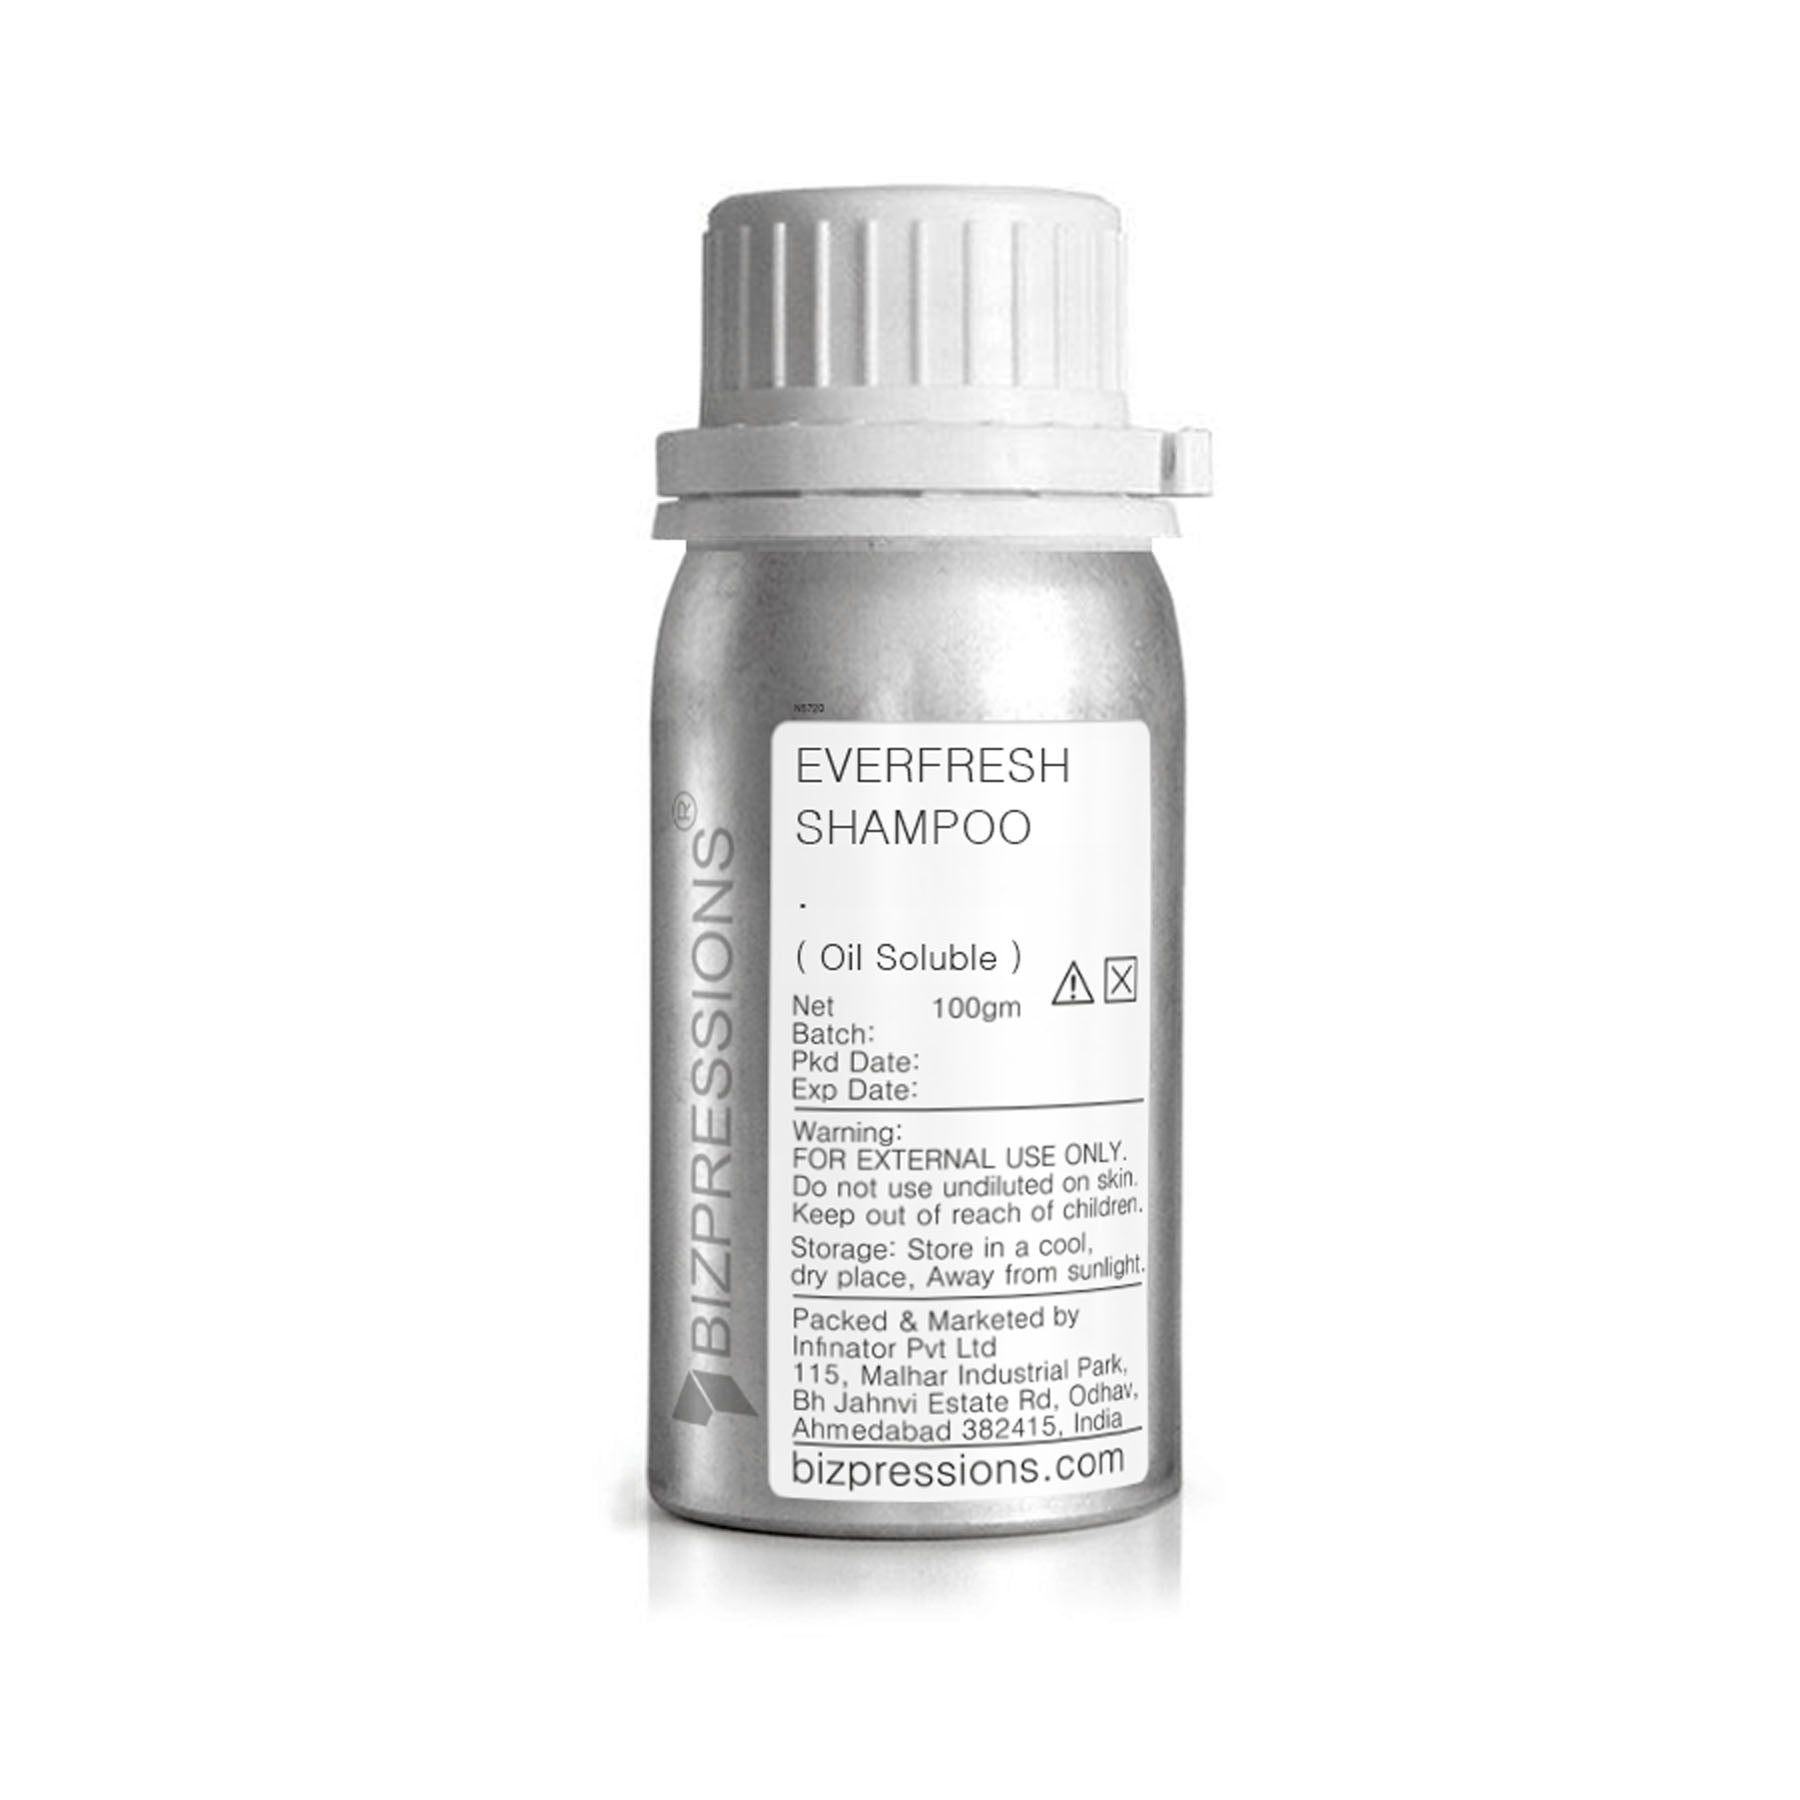 EVERFRESH SHAMPOO - Fragrance ( Oil Soluble ) - 100 gm